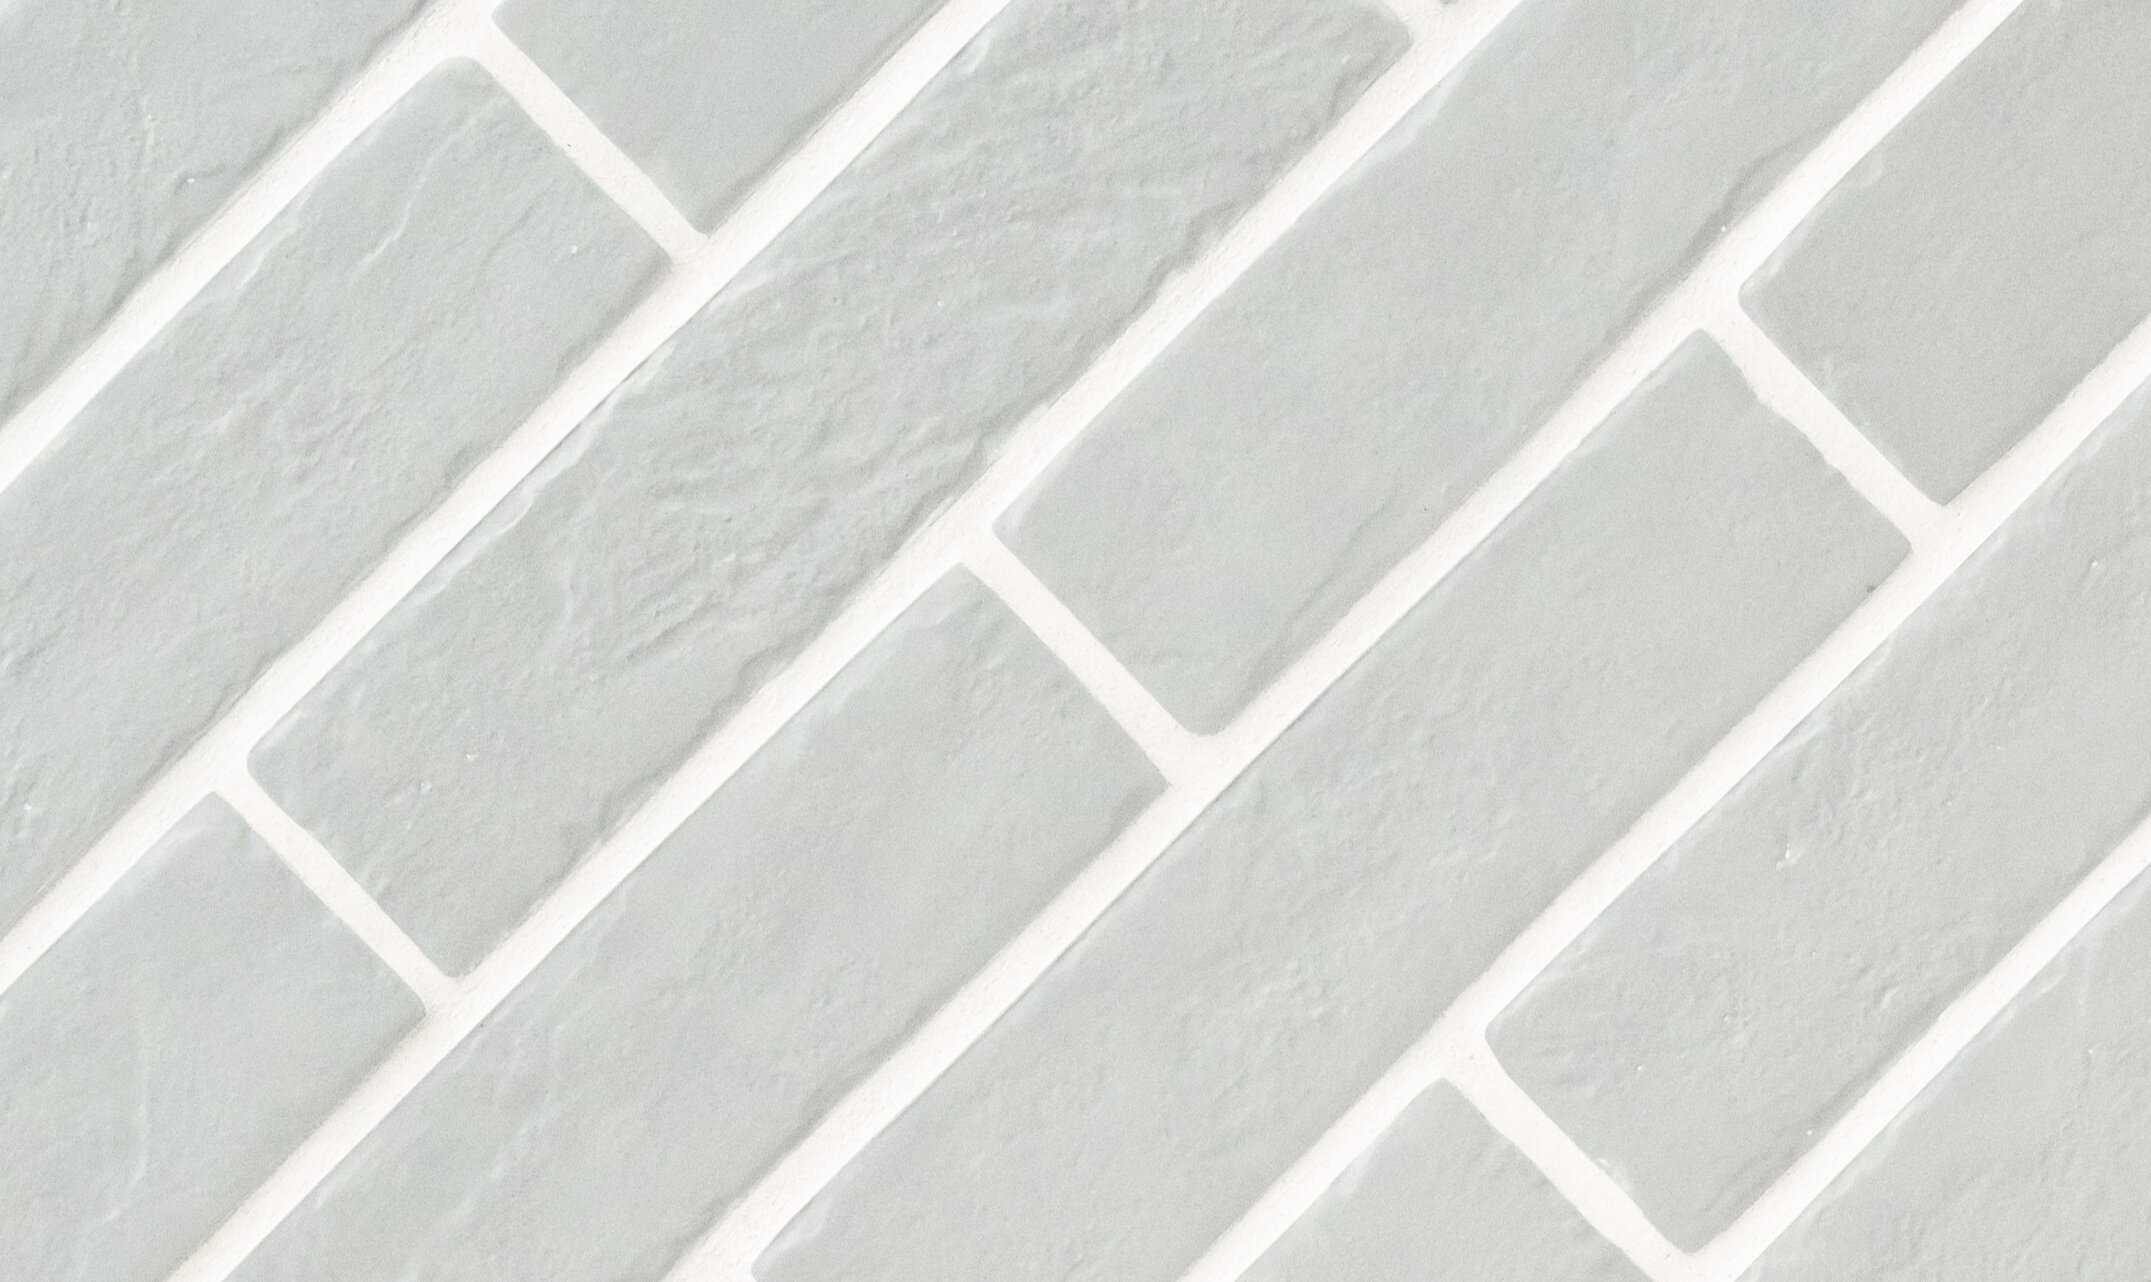 Wayfair   White & Cream Bathroom Tile You'll Love in 18